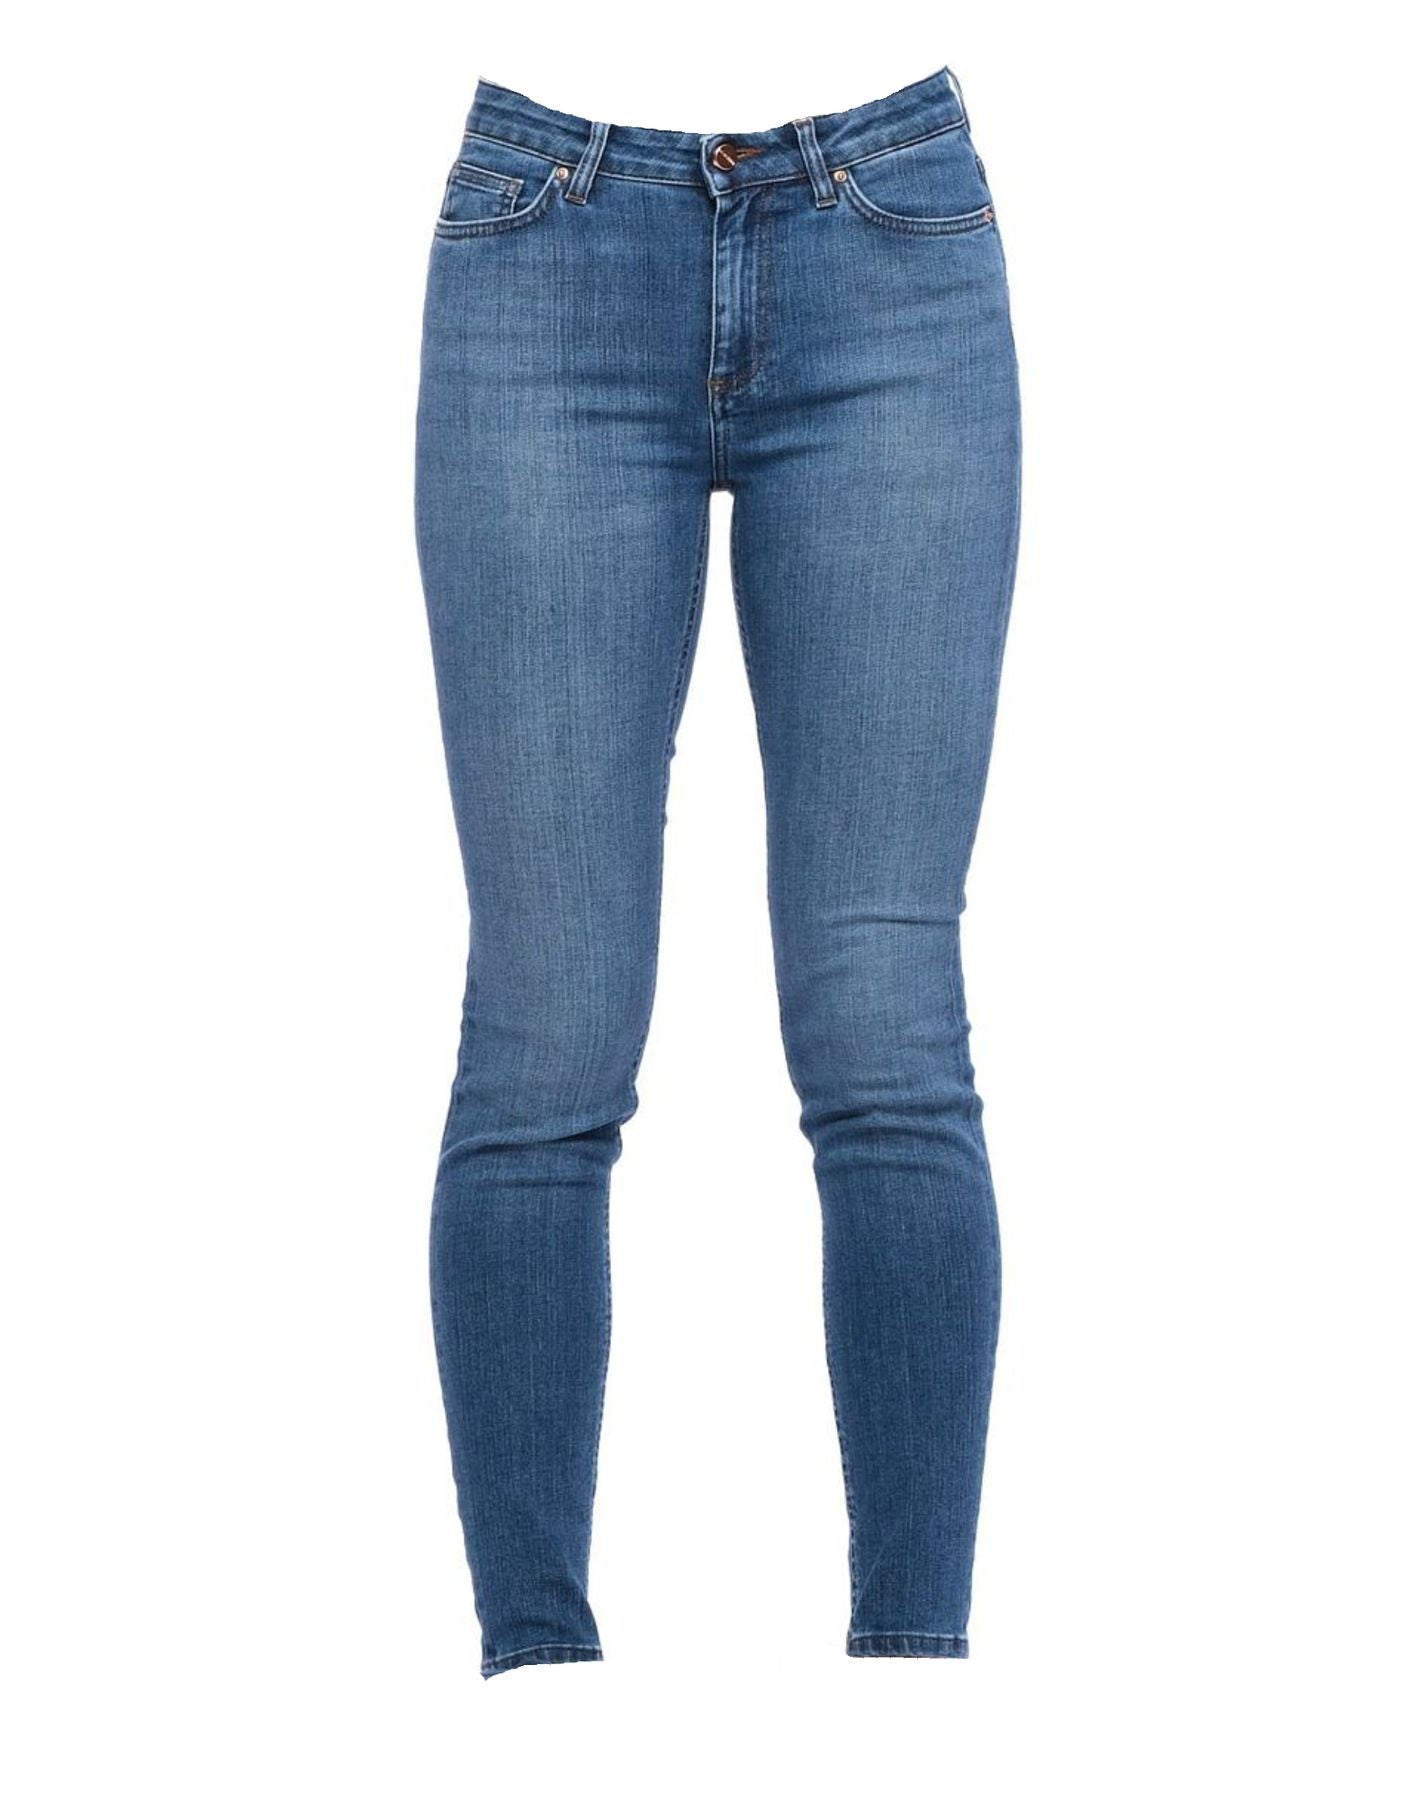 Jeans pour femme DON THE FULLER CANNES DTF28B 902